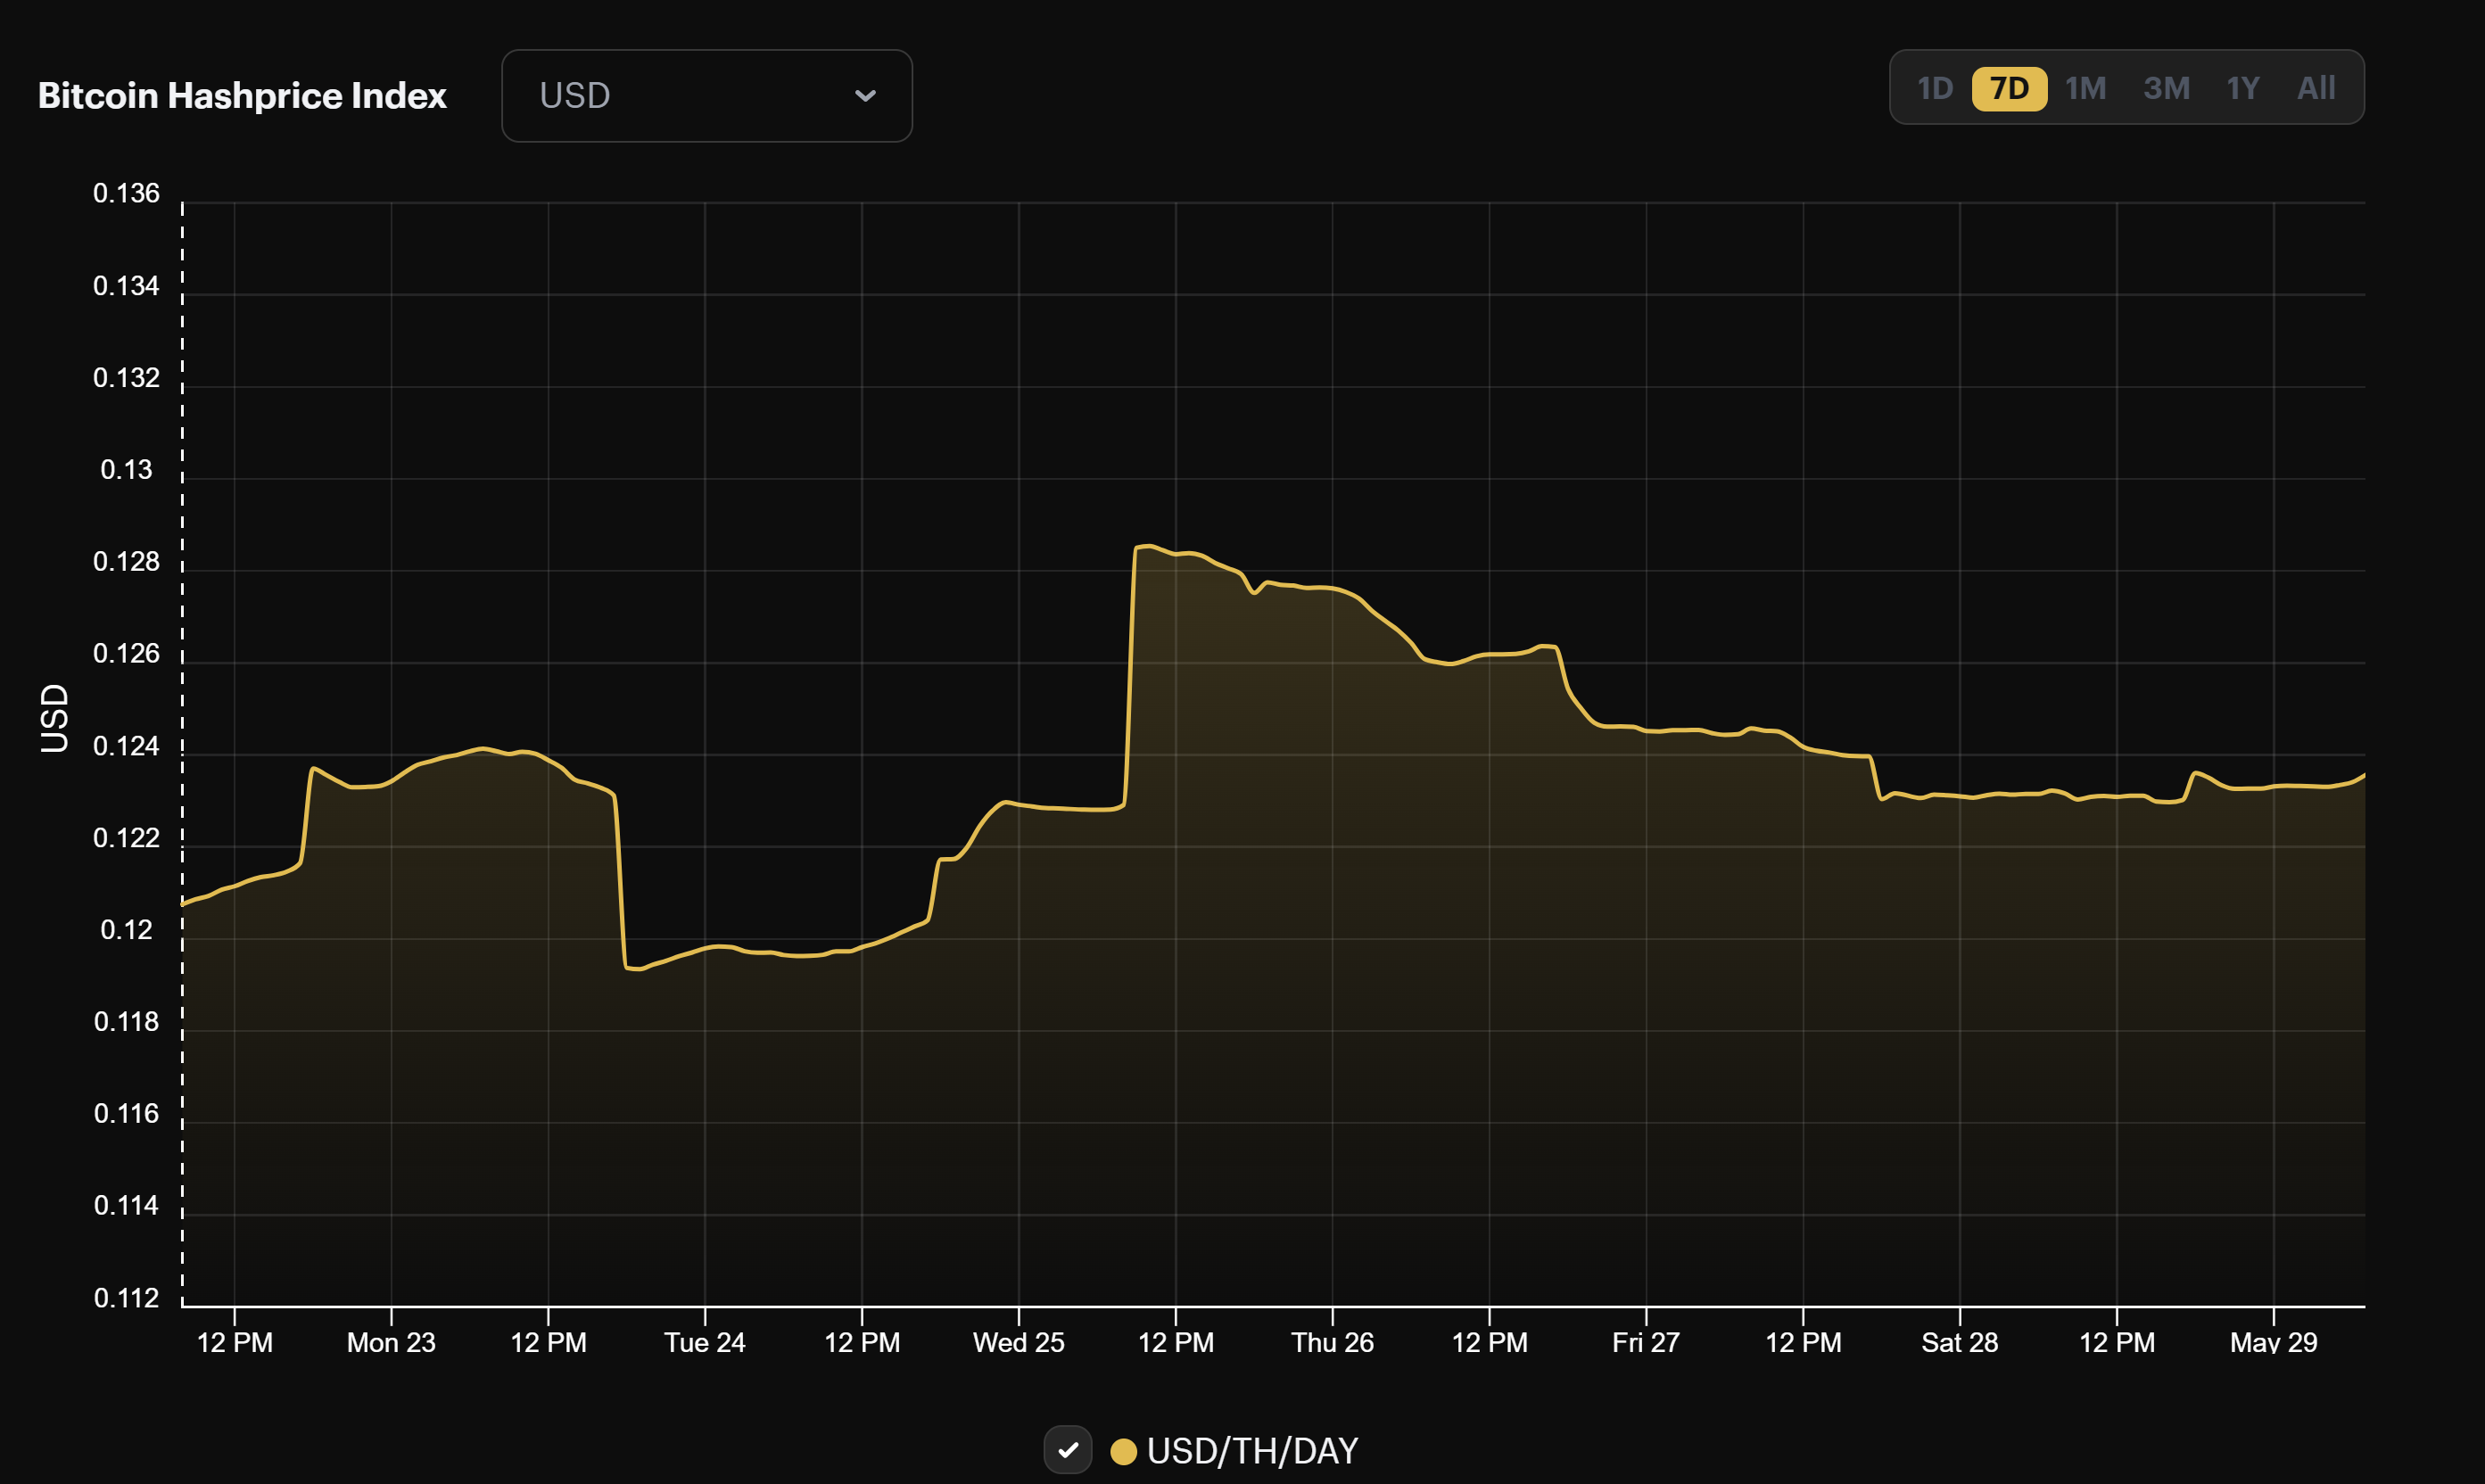 Bitcoin mining USD hashprice (May 22 - May 29, 2022)